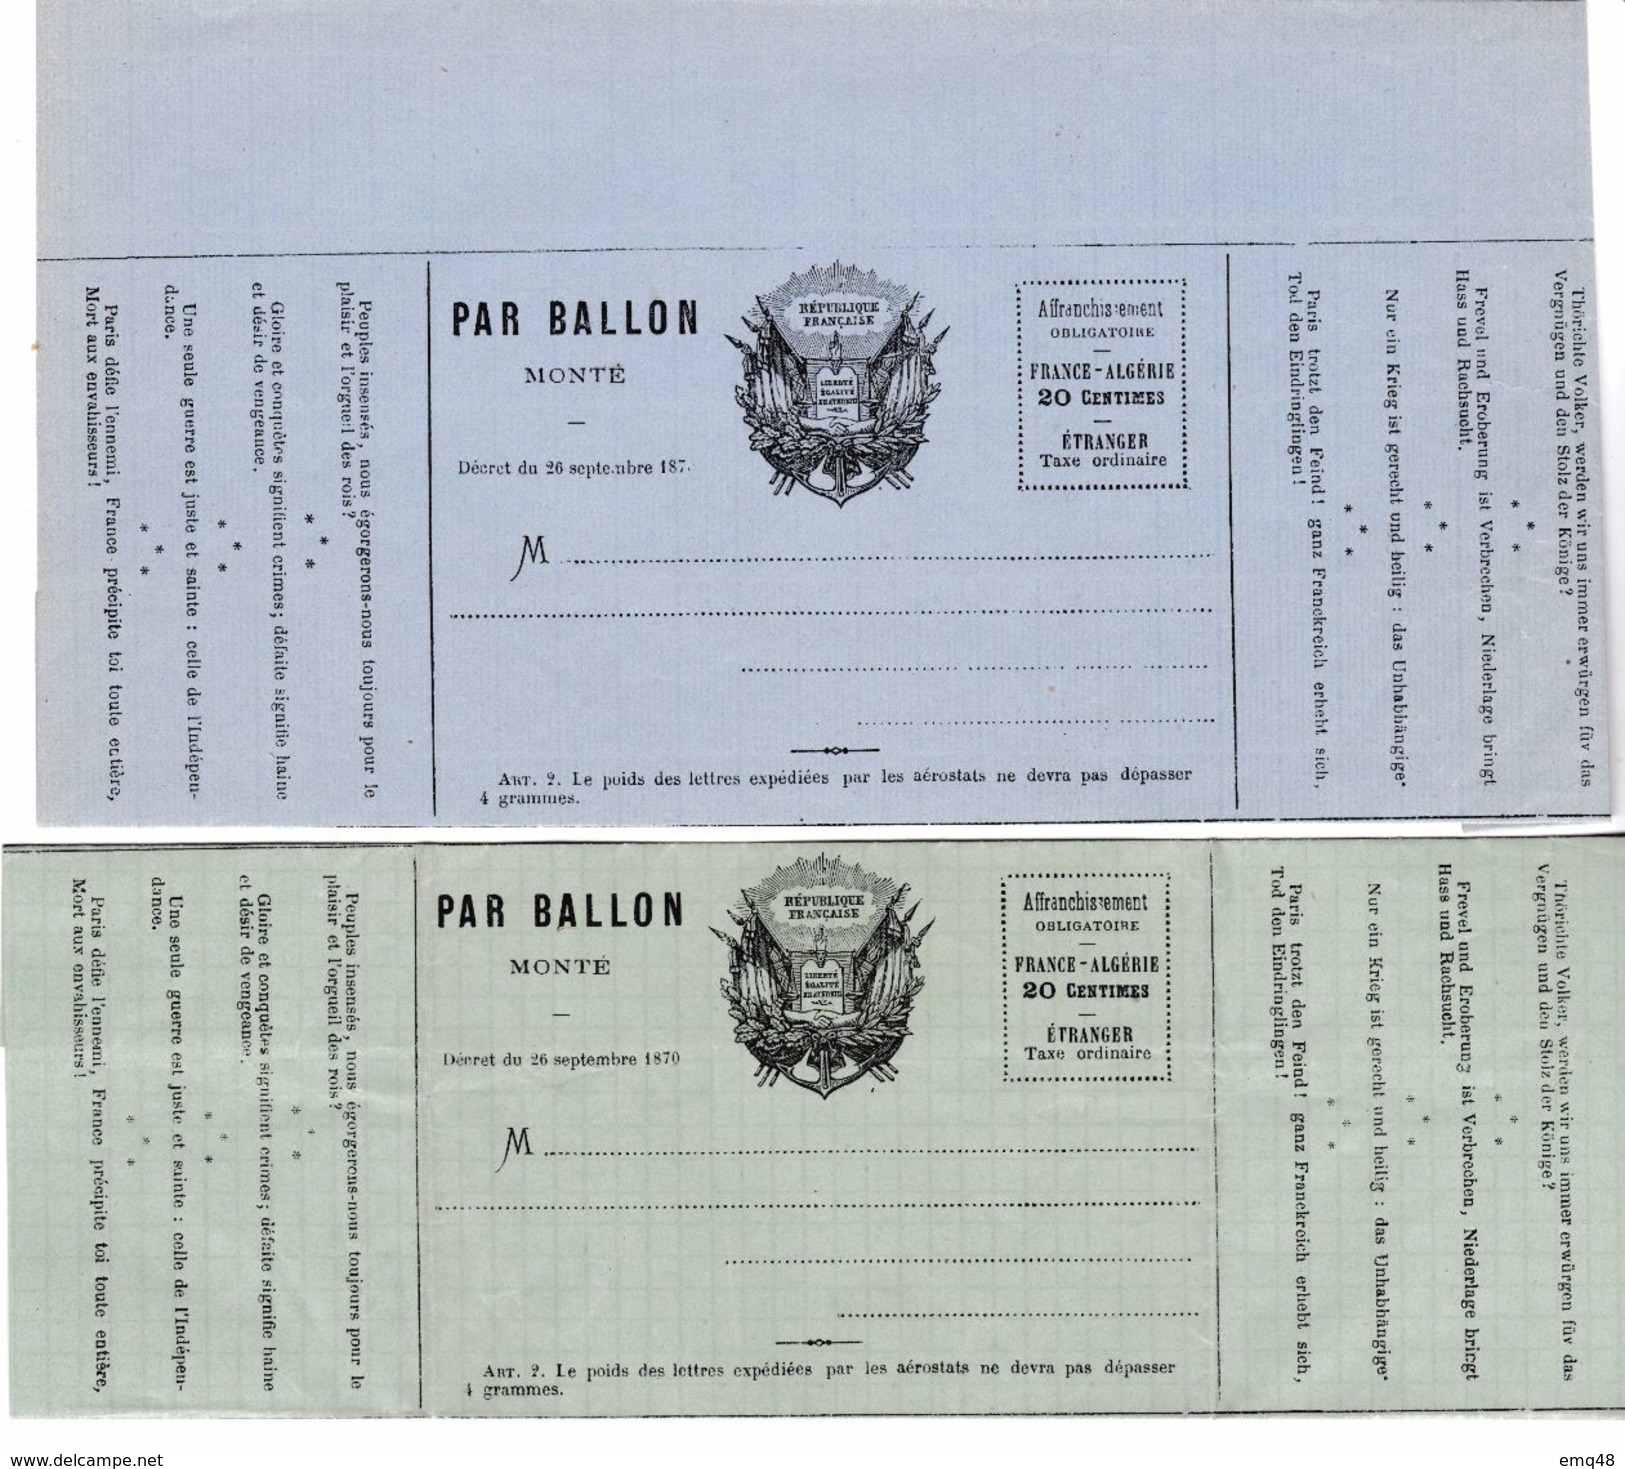 210 - FRANC-MACONNERIE (MASONIC) : Formulaires De BALLONS MONTES Avec SYMBOLES (4 Documents) - Francmasonería